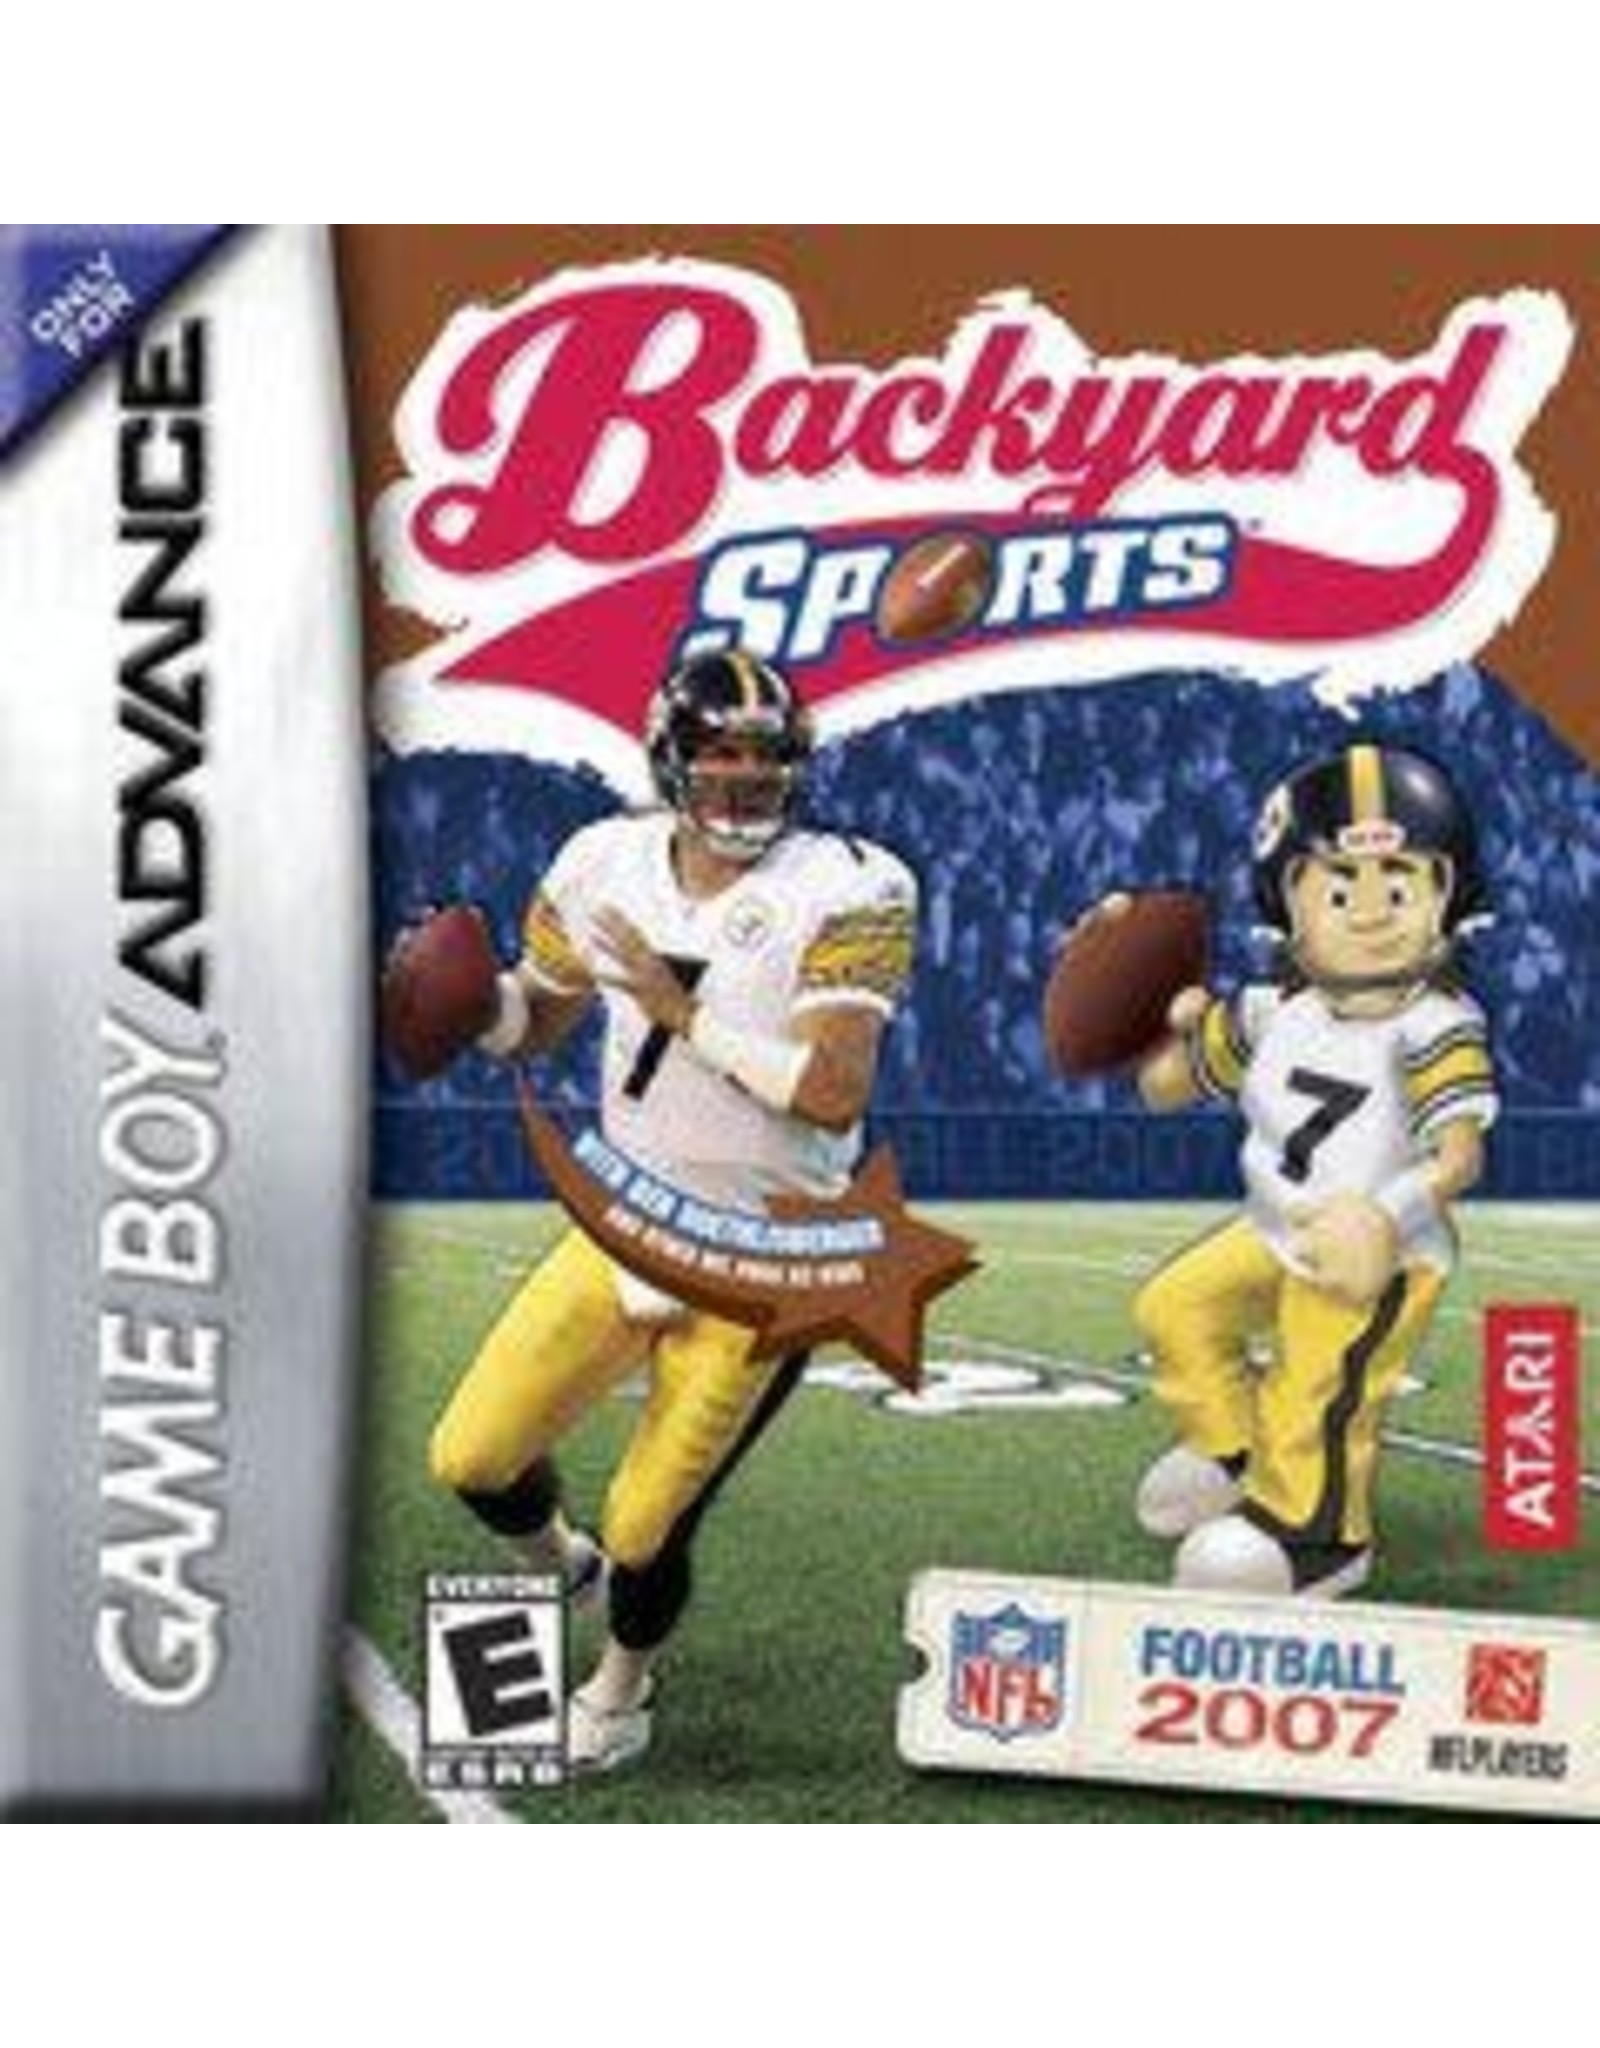 Game Boy Advance Backyard Football 2007 (CiB)